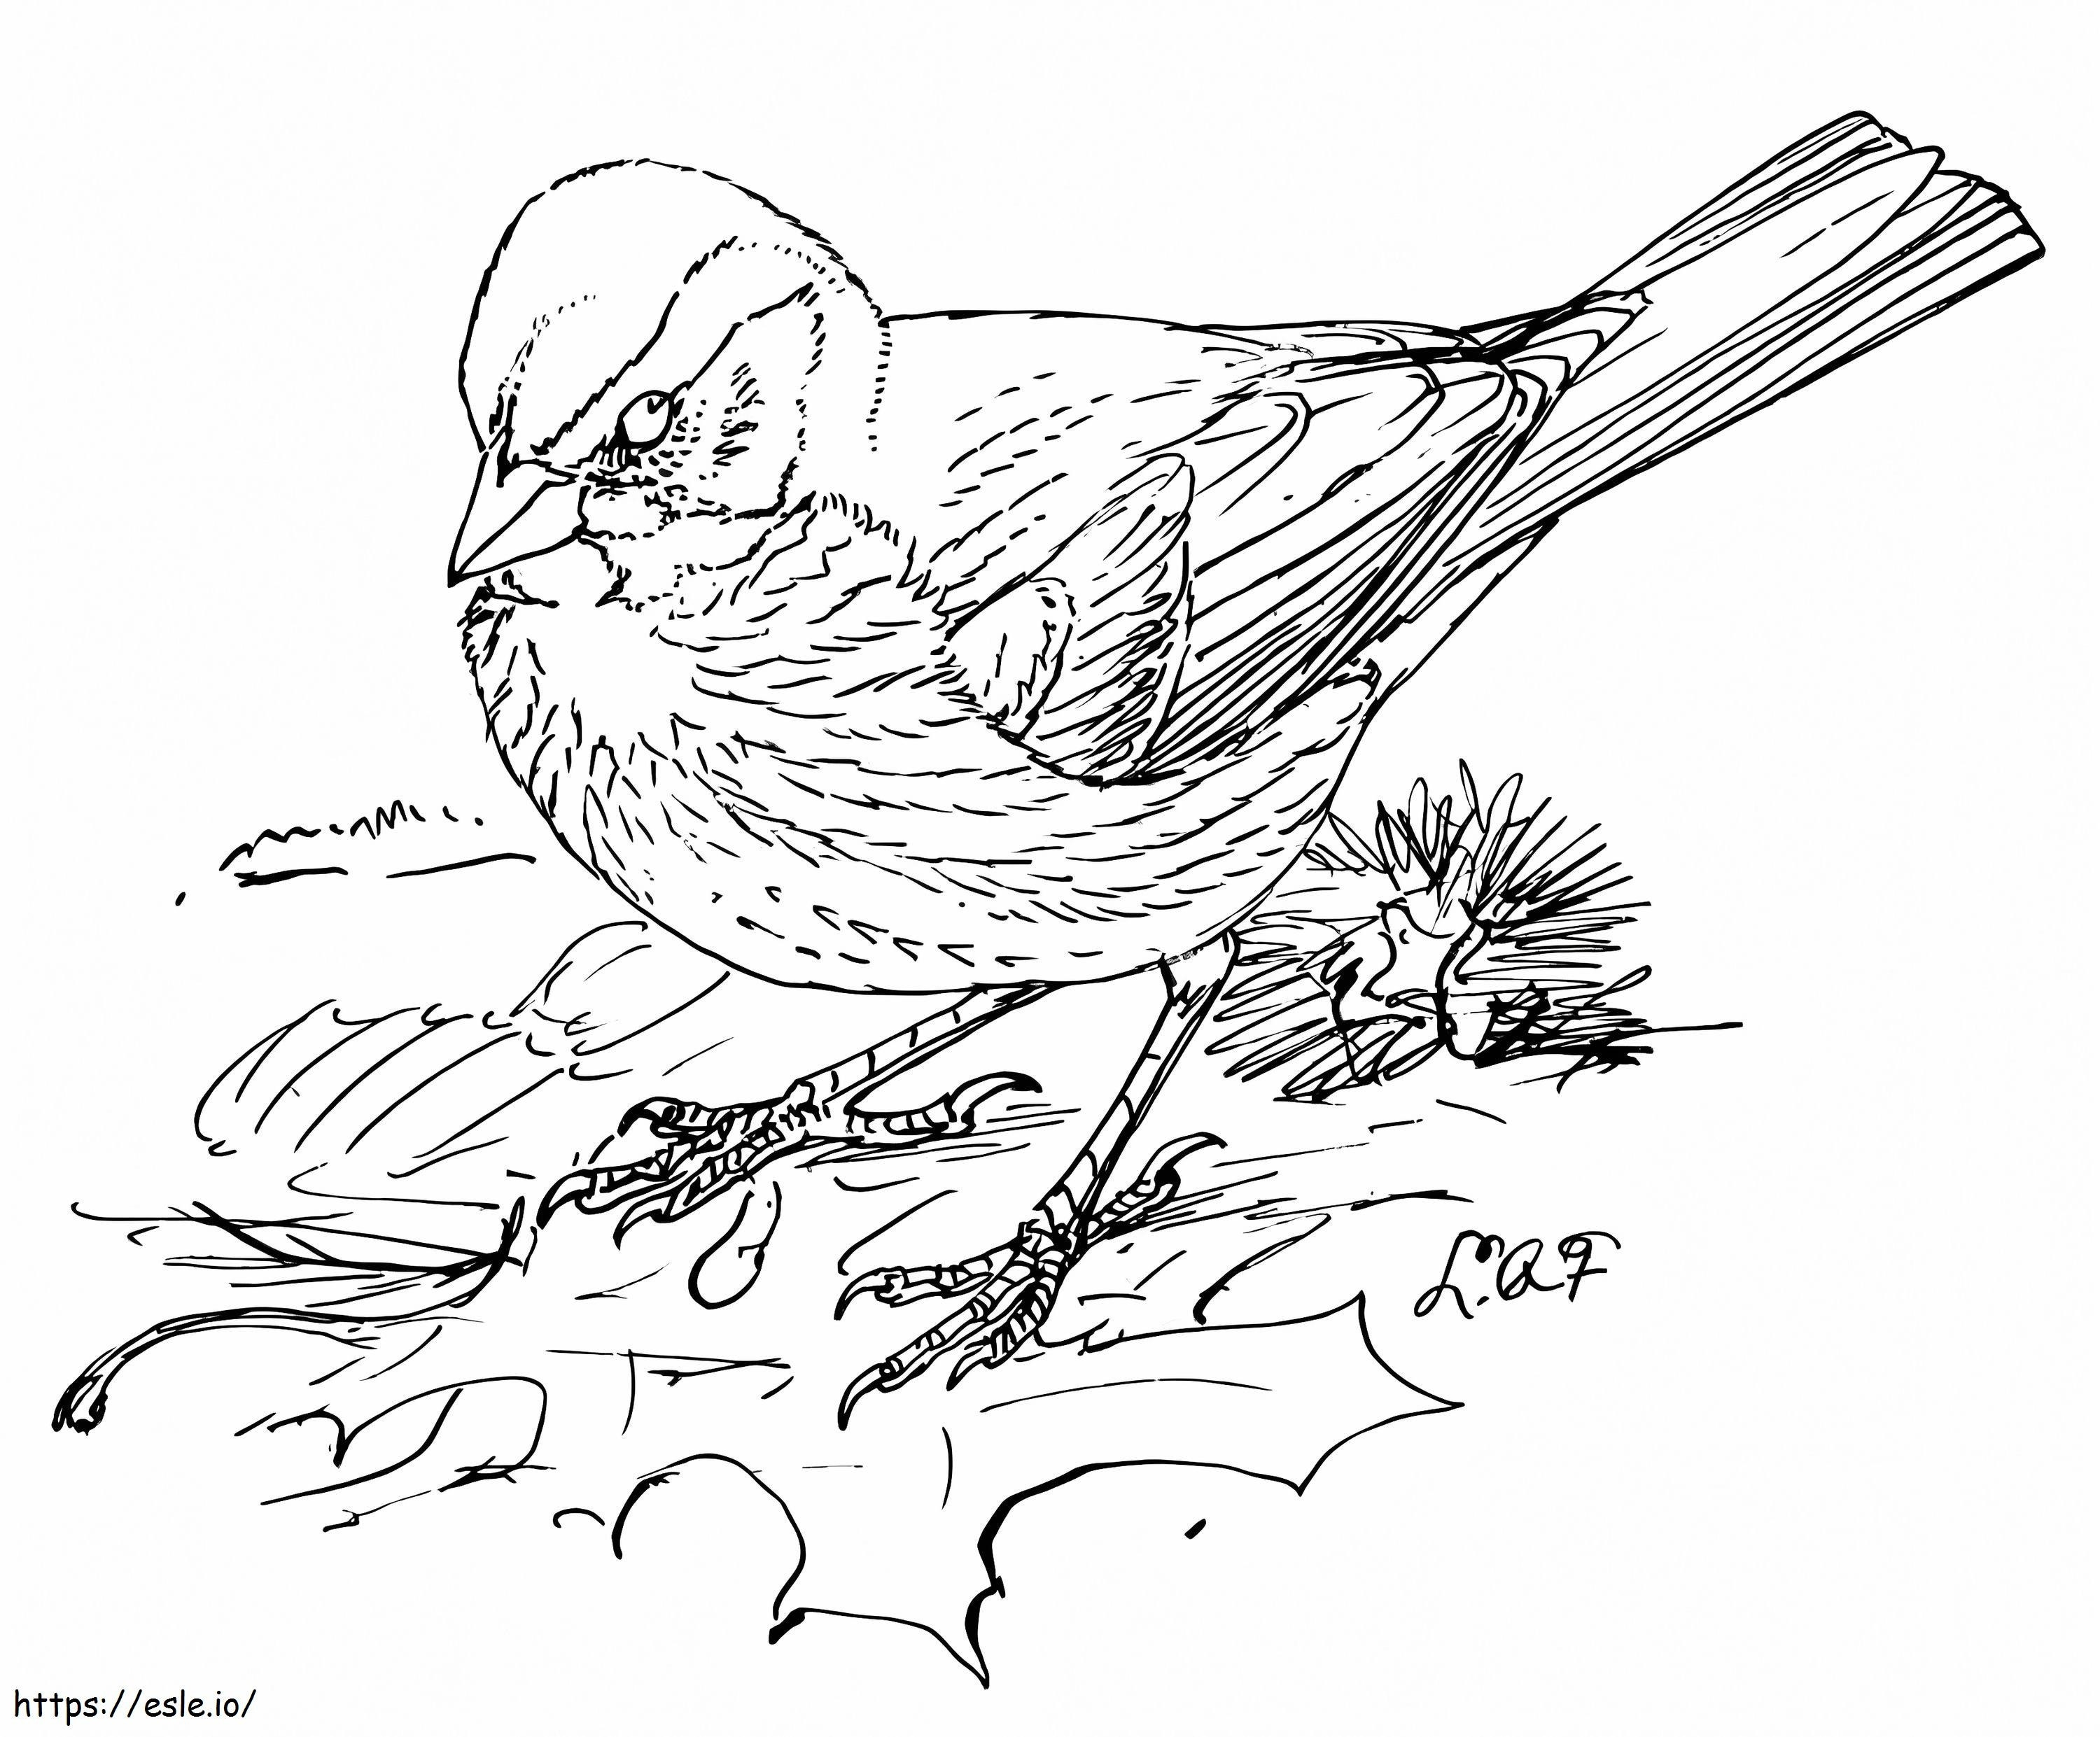 Sparrow Attack coloring page